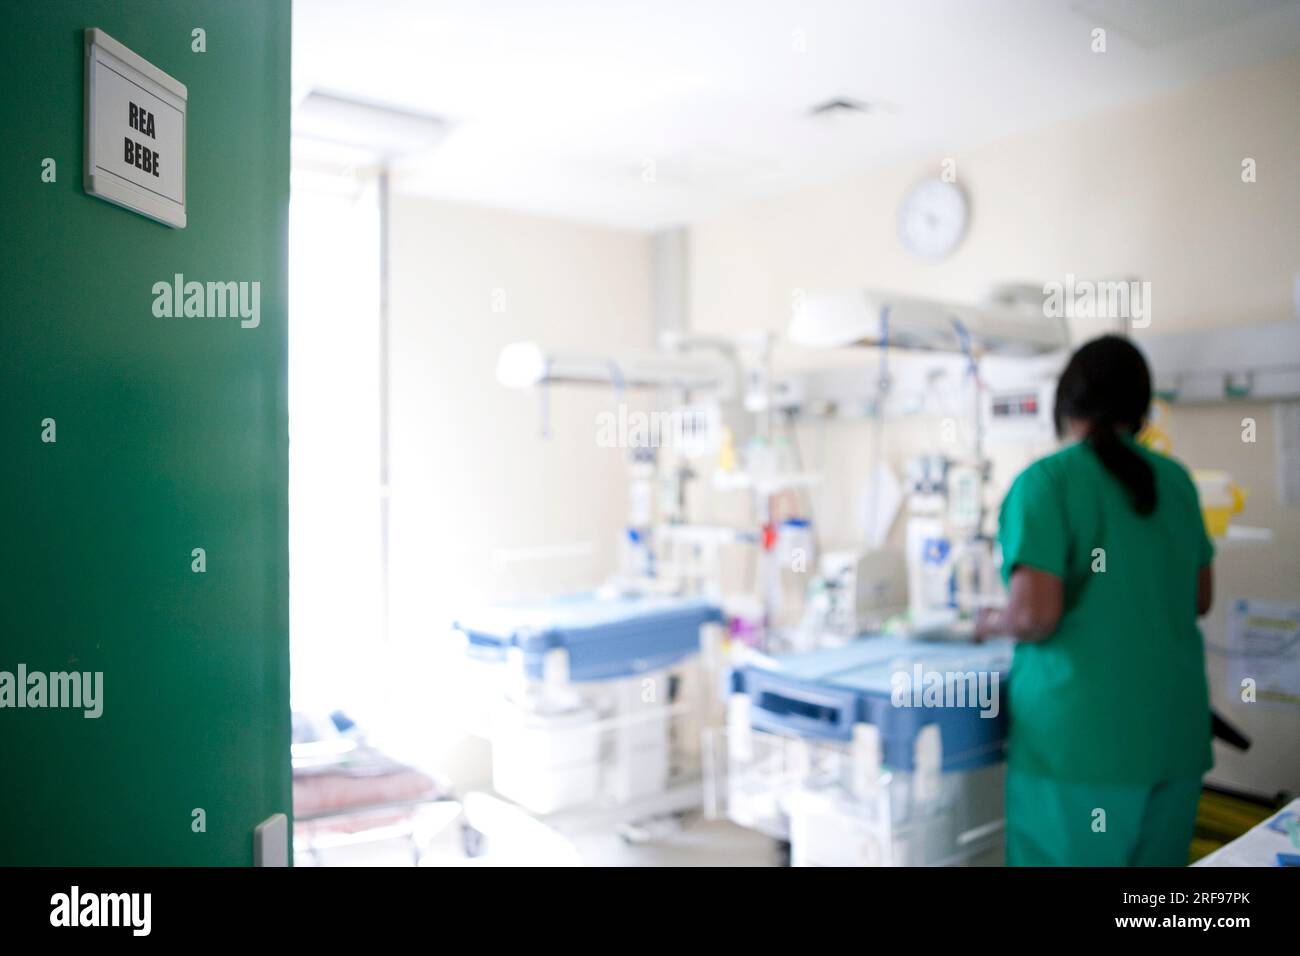 Newborn resuscitation in the maternity ward of a hospital. Stock Photo